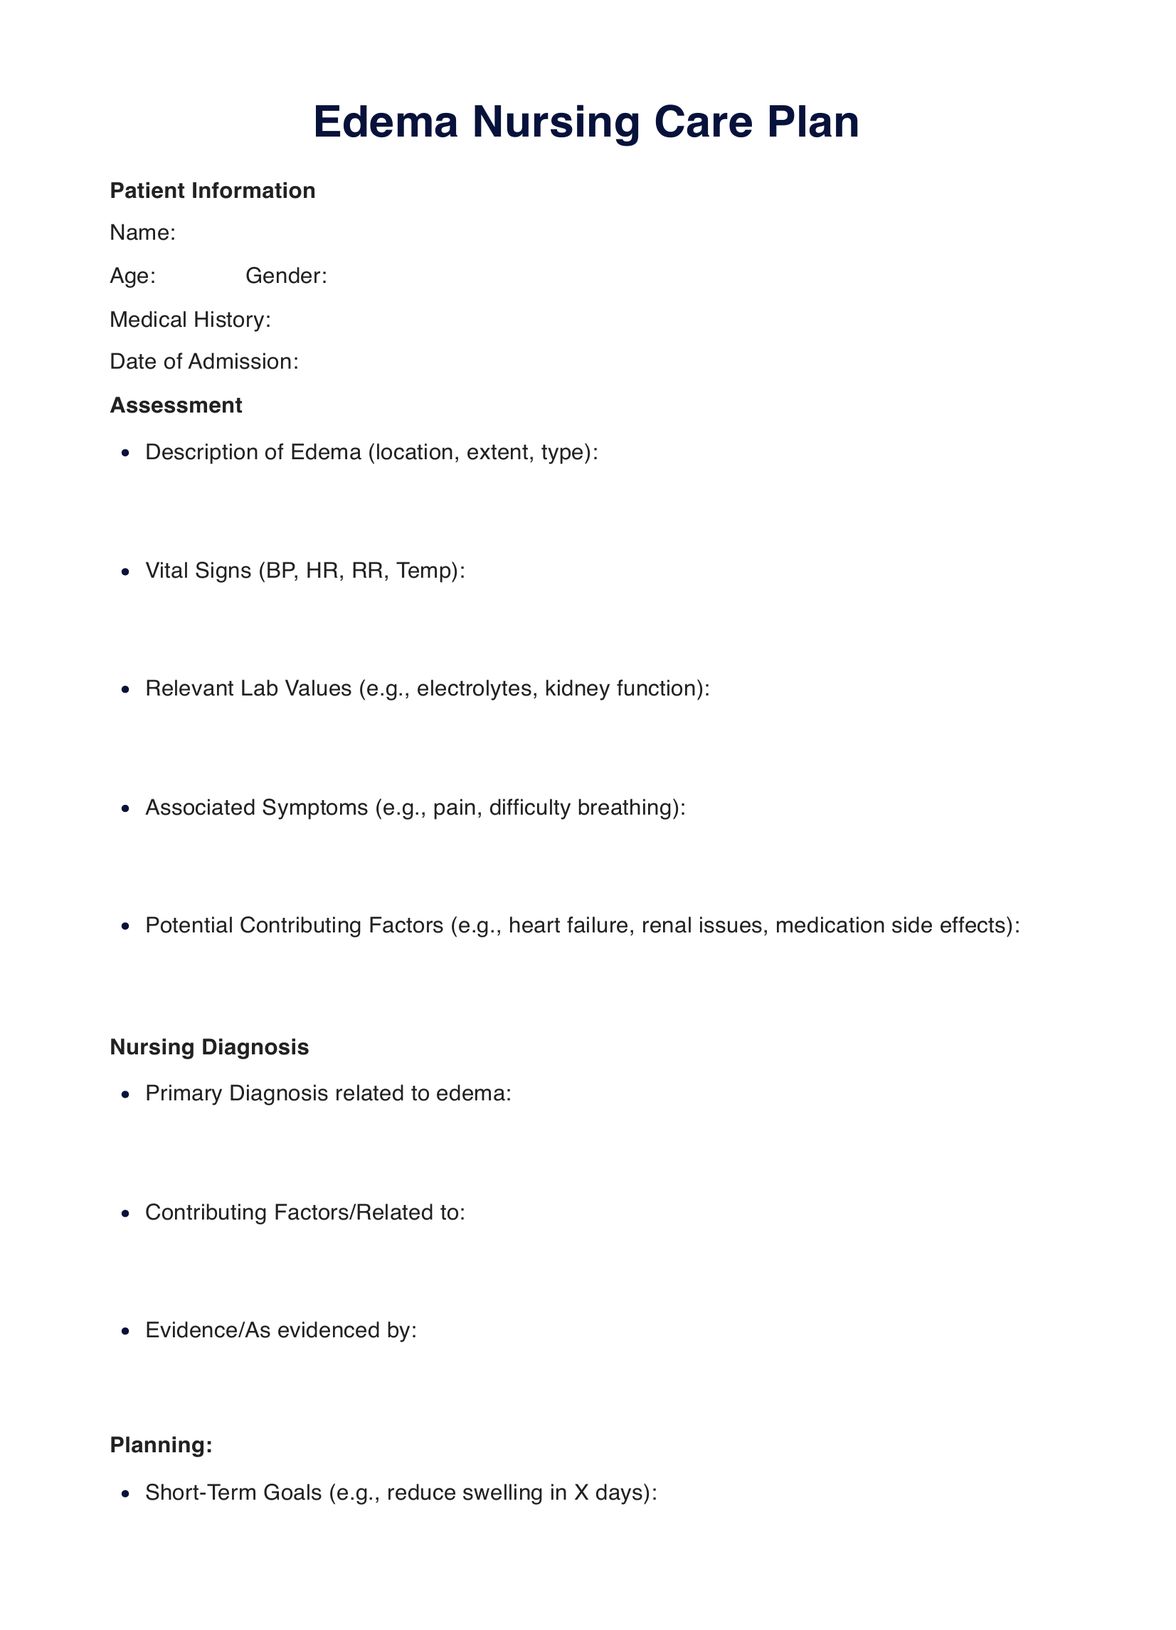 Edema Nursing Care Plan PDF Example